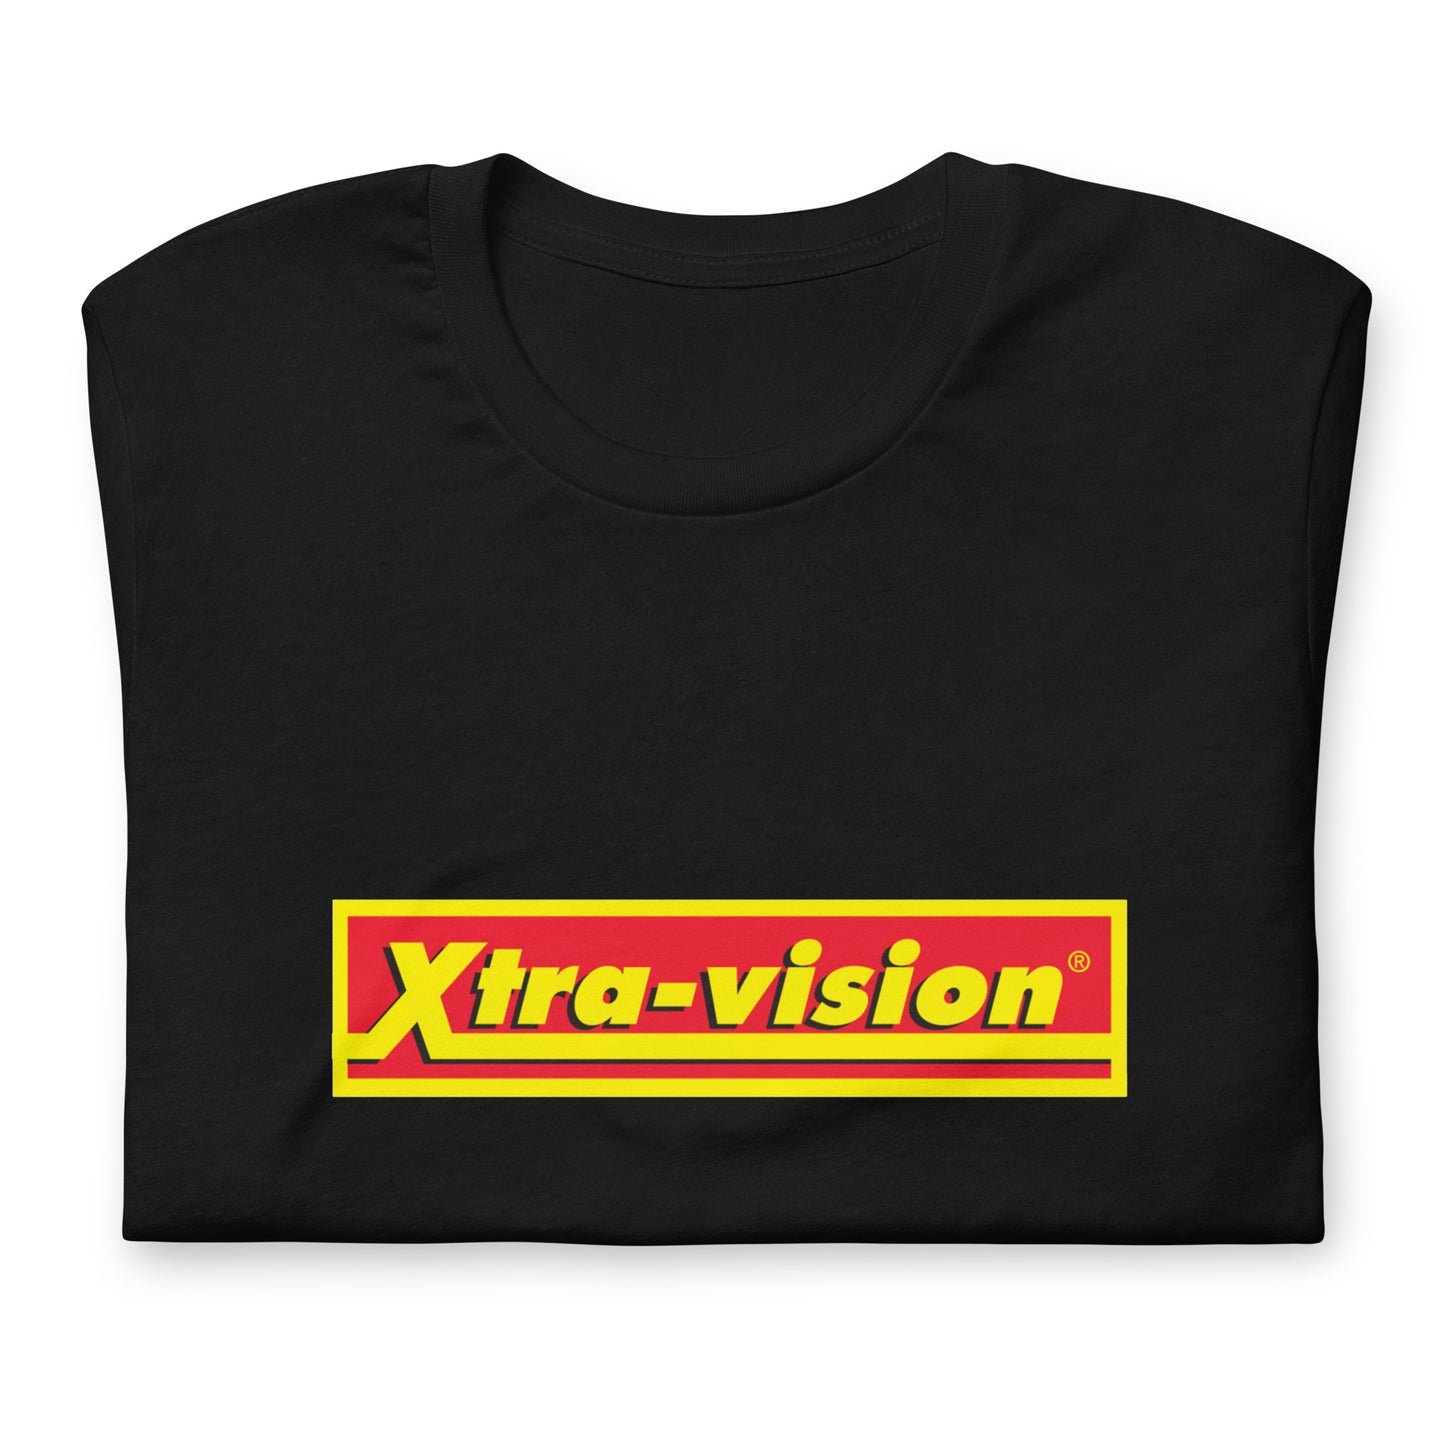 Xtra-vision Unisex T-shirt